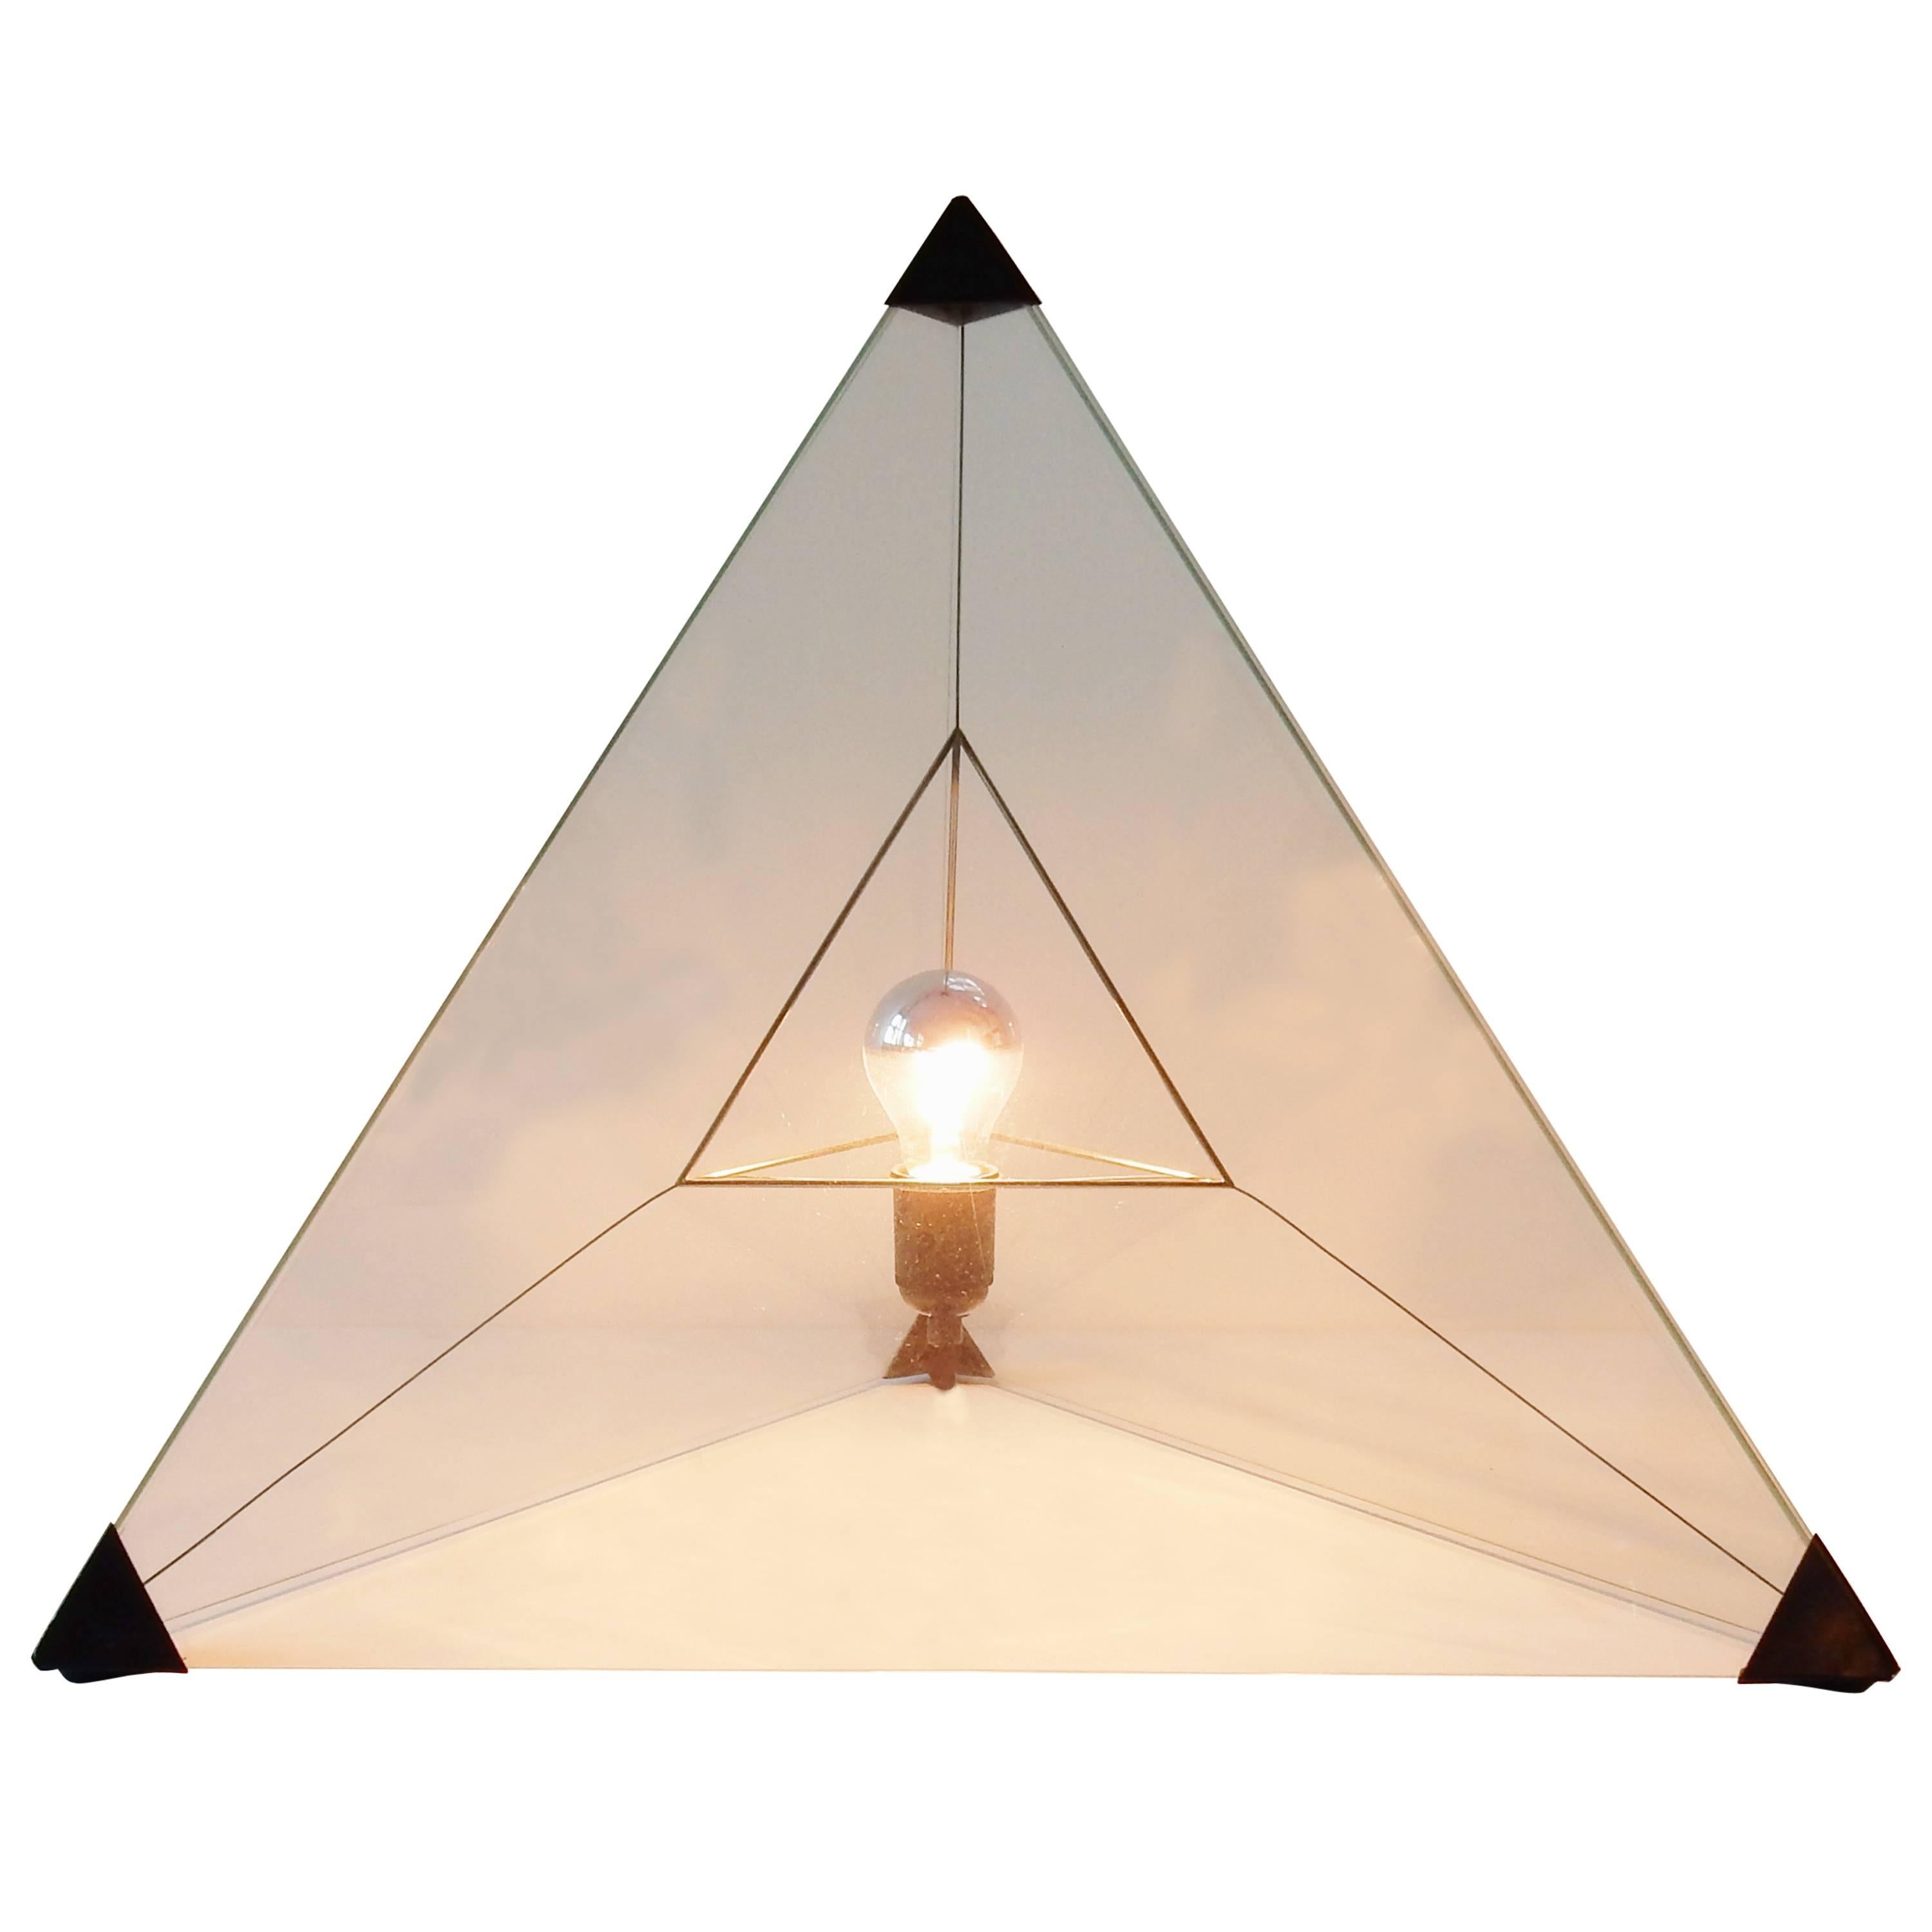 'Tetrahedron' Table or Floor Lamp, Dutch Design, 1970s